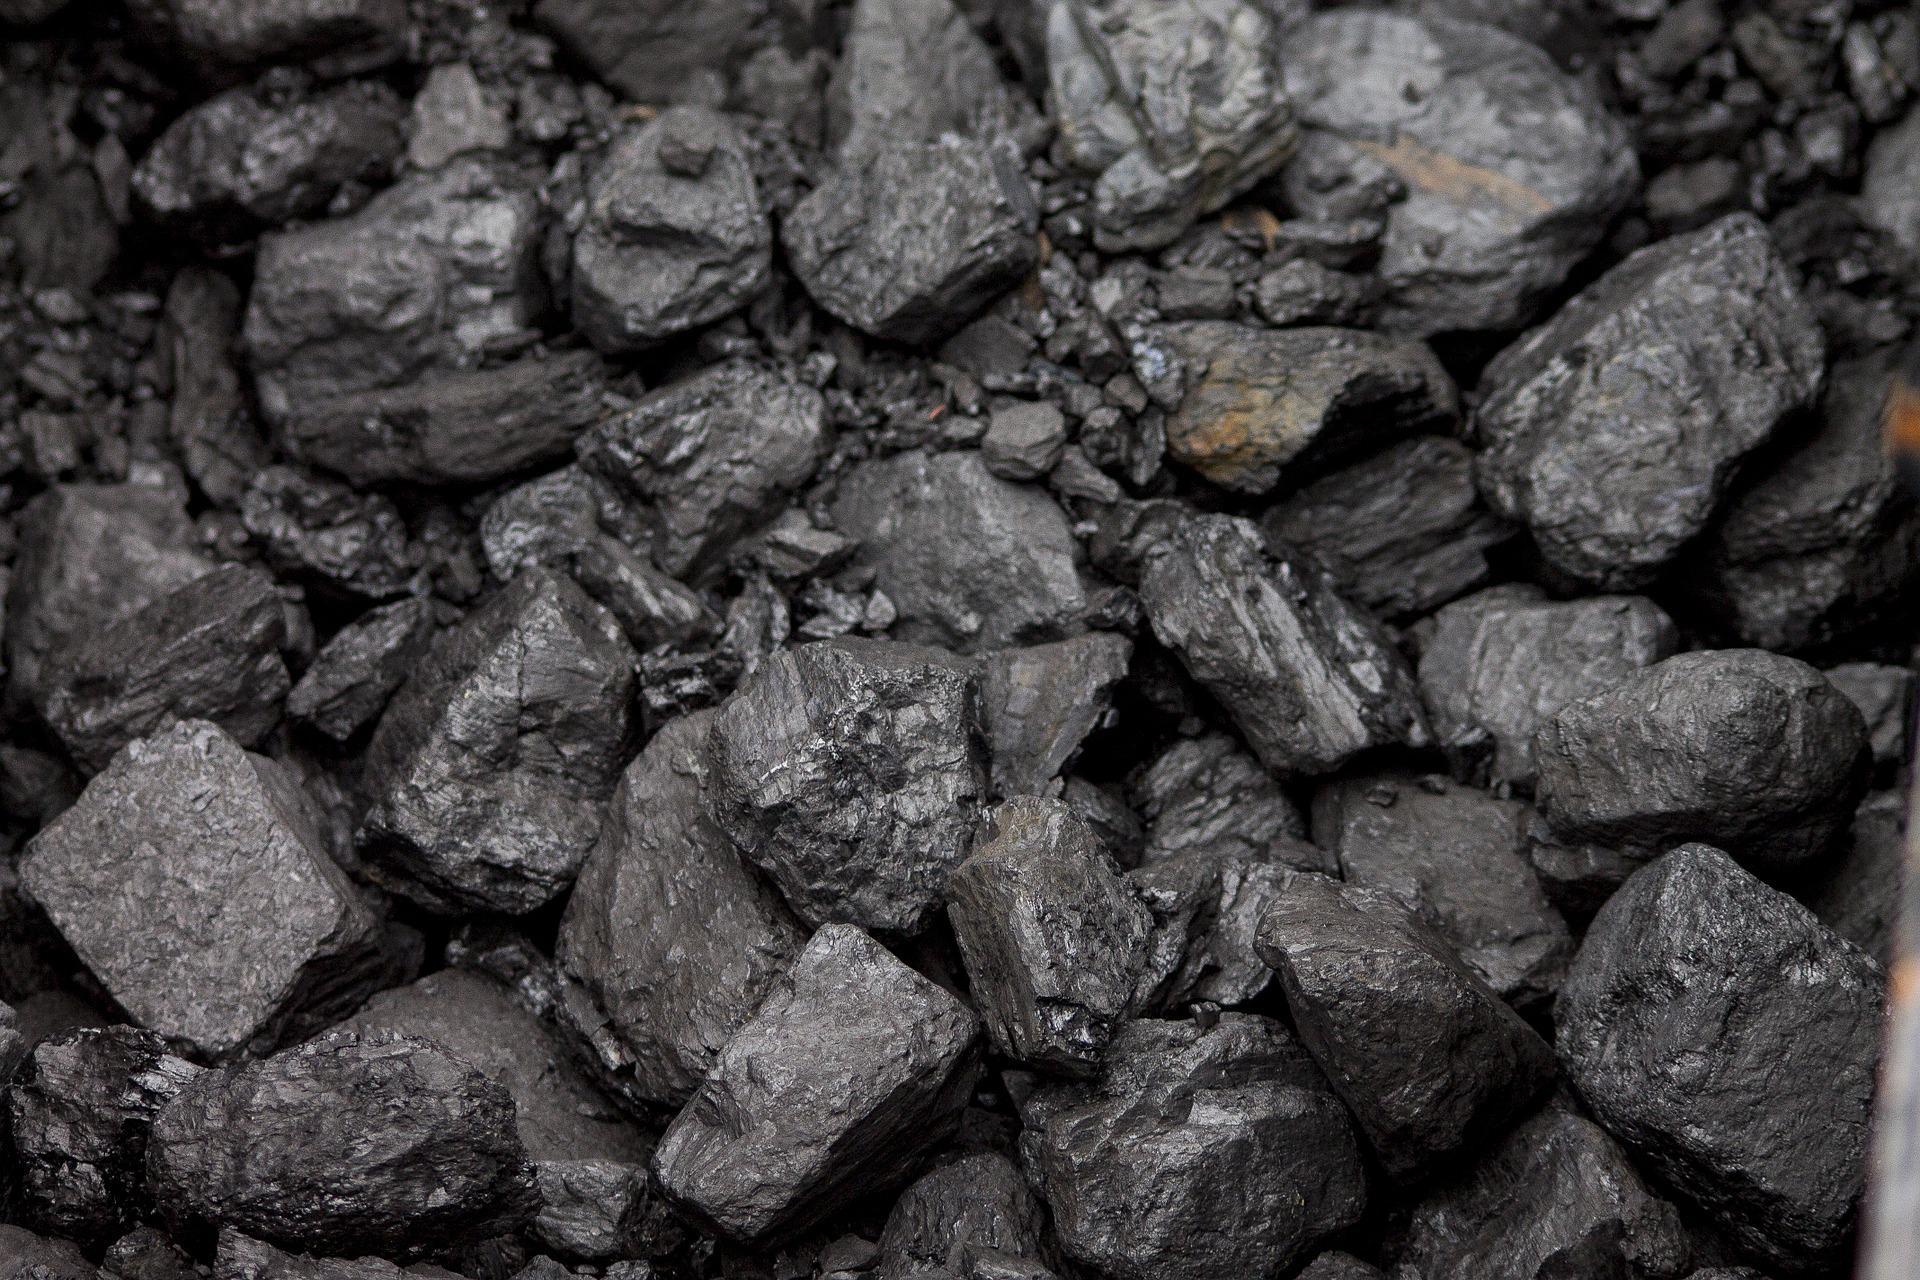 Zakup węgla z PGG